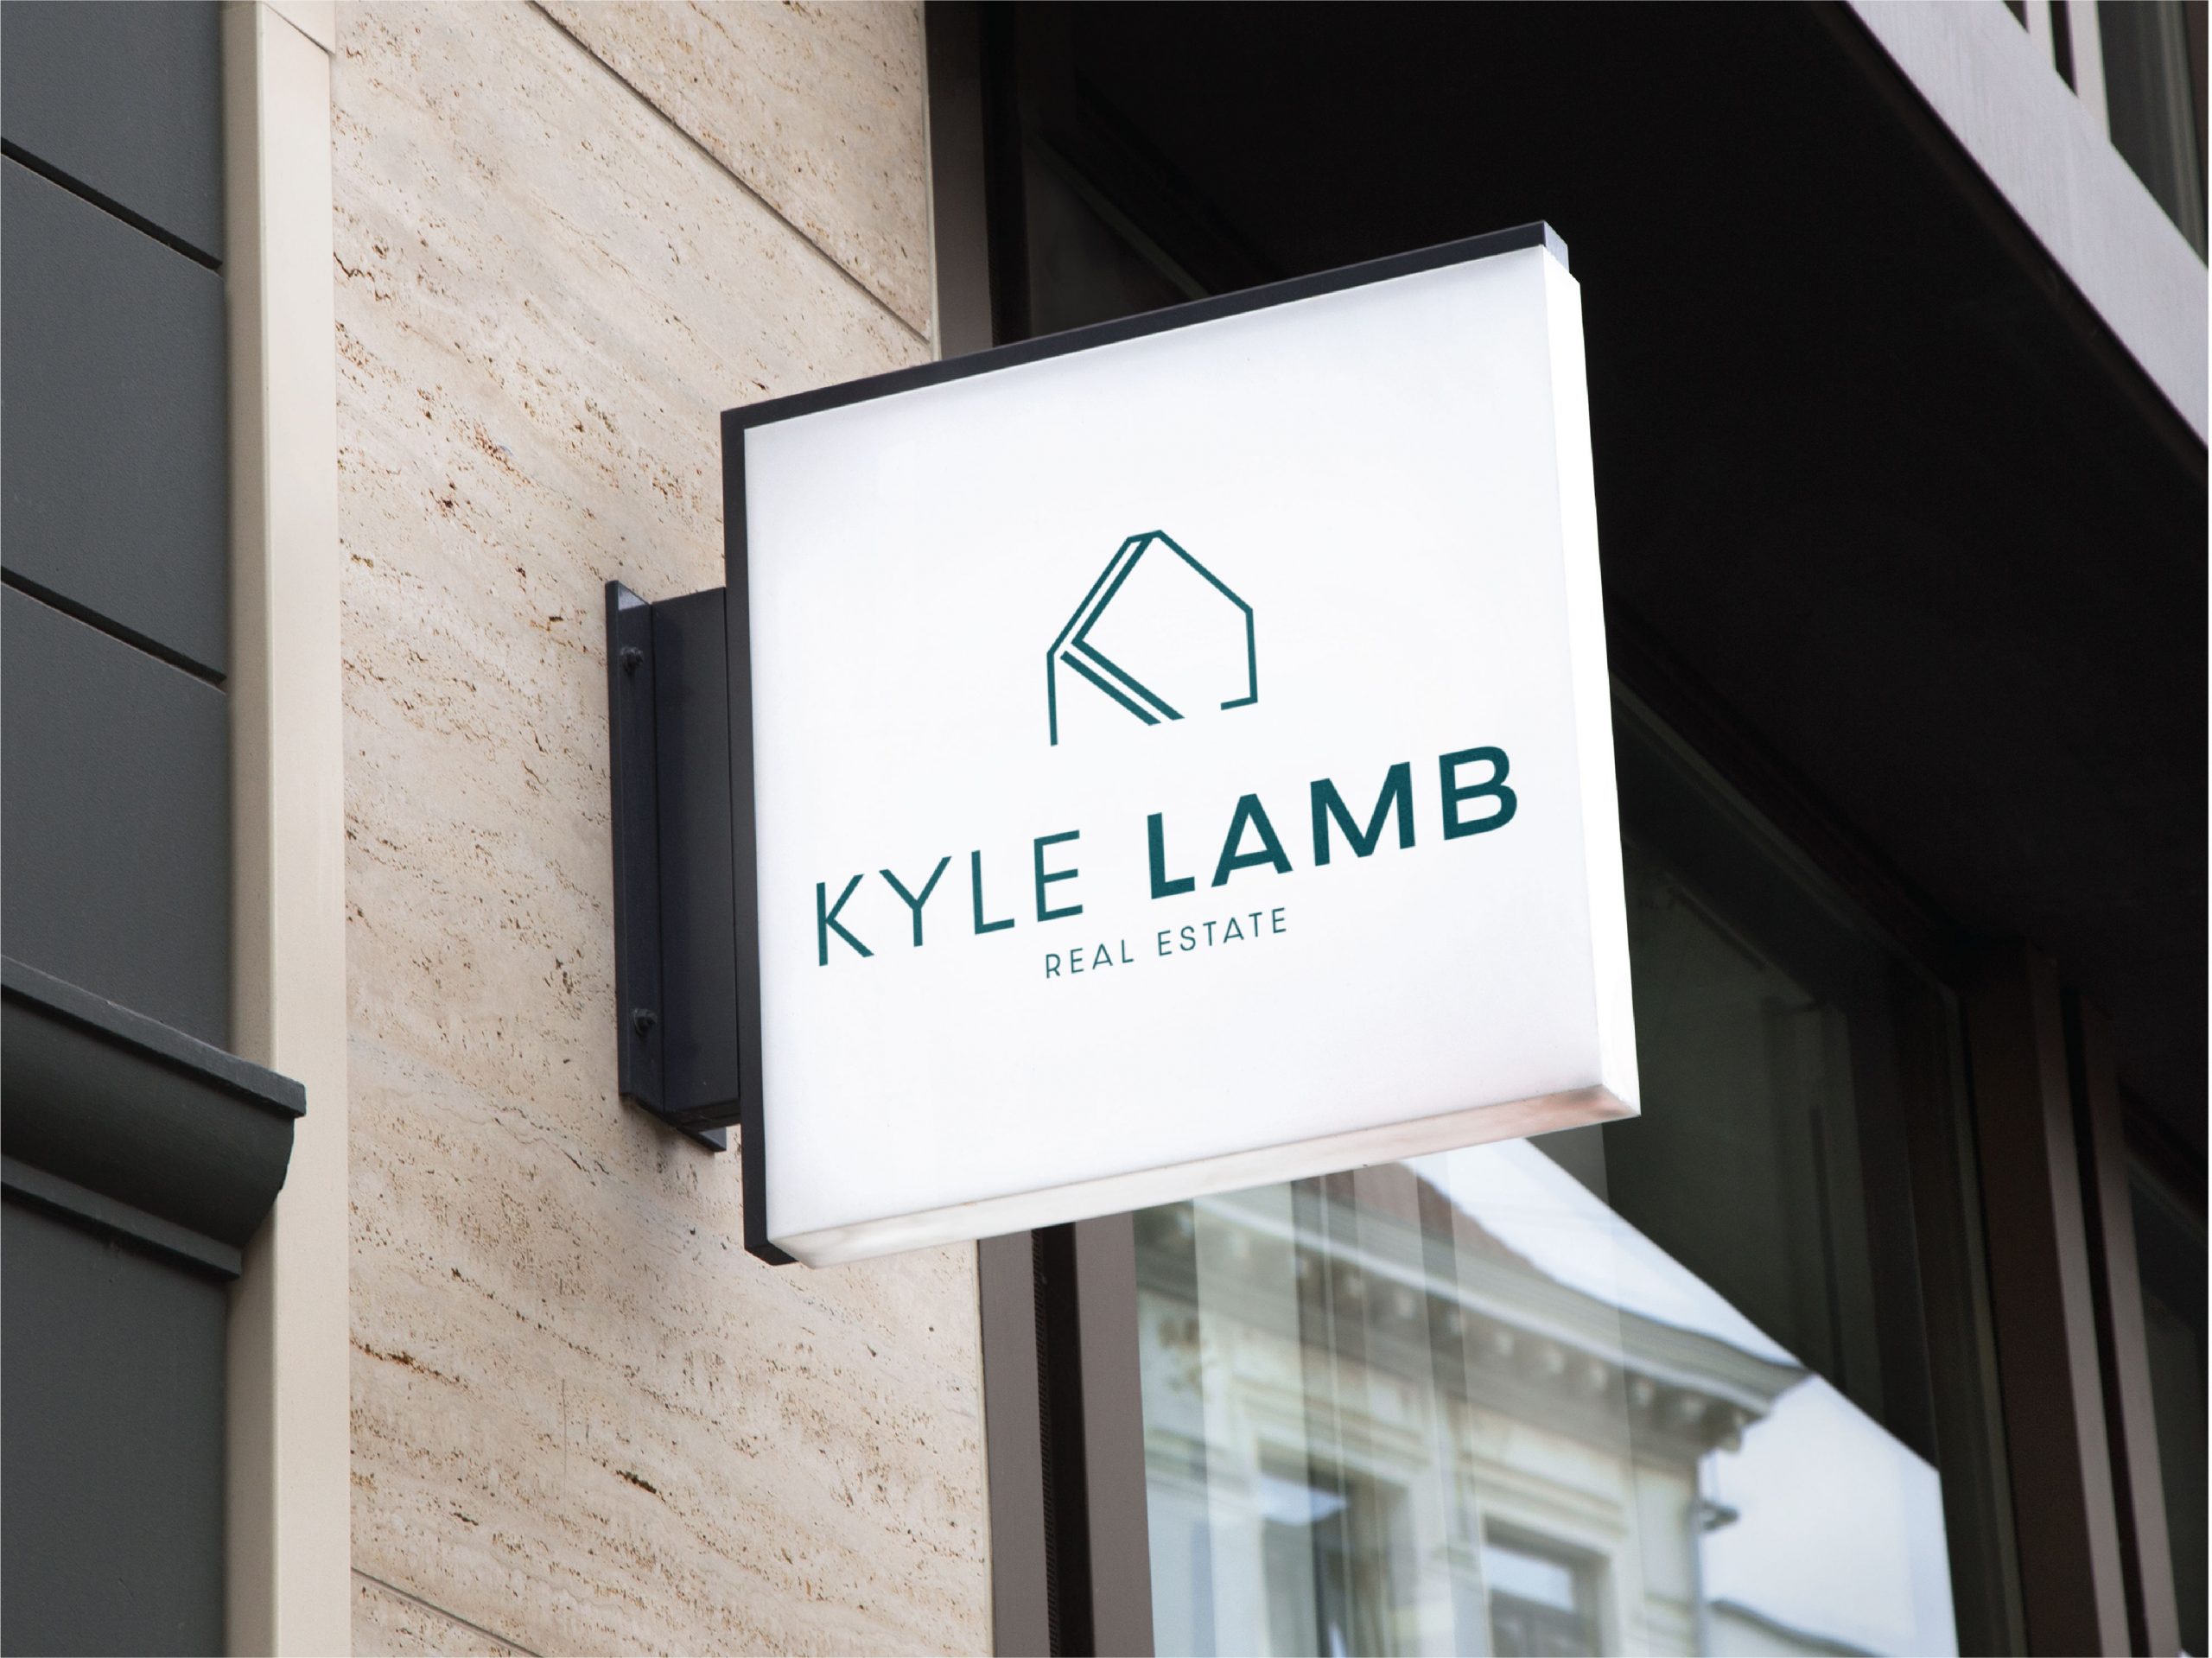 Kyle Lamb real estate signage - White canvas design